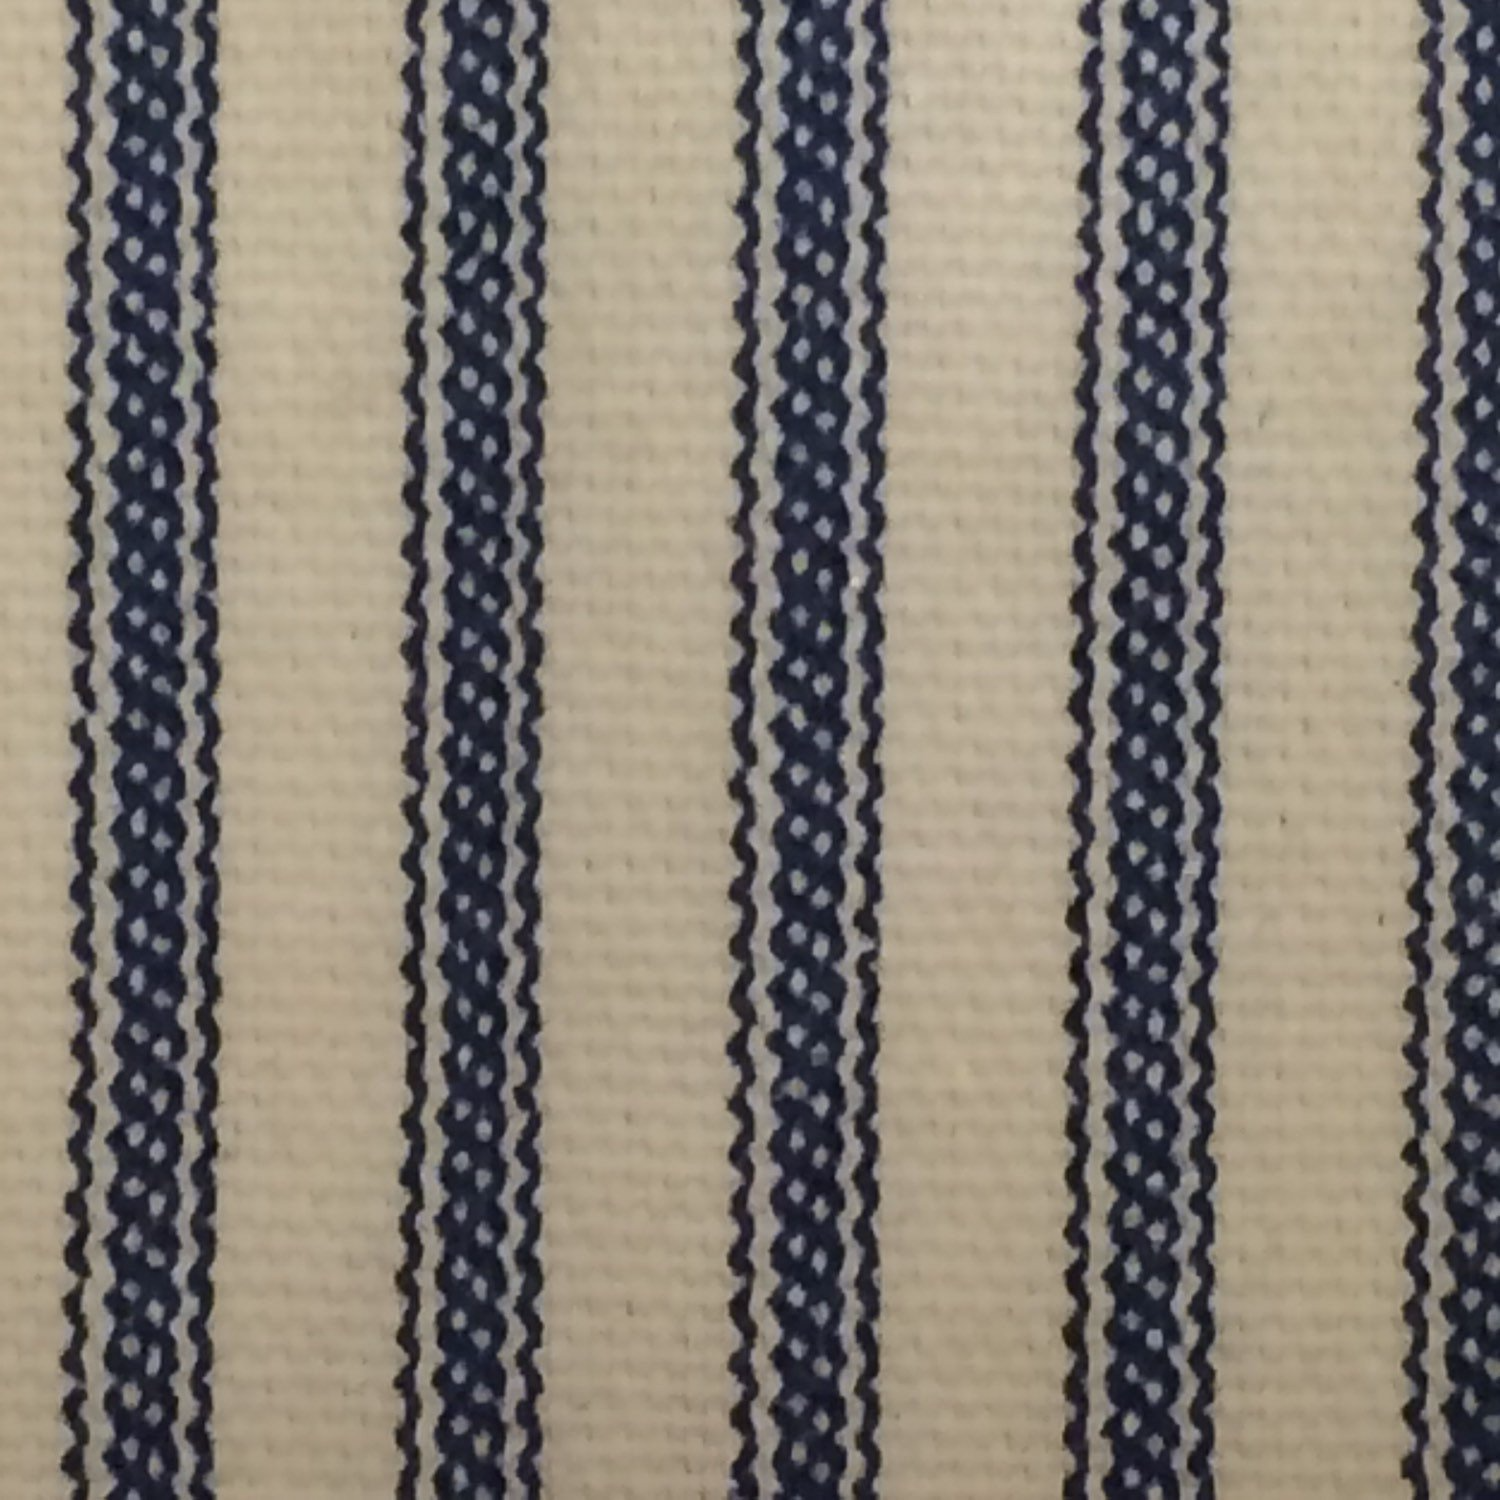 Detail Of Navy Blue Ticking Stripe Fabric